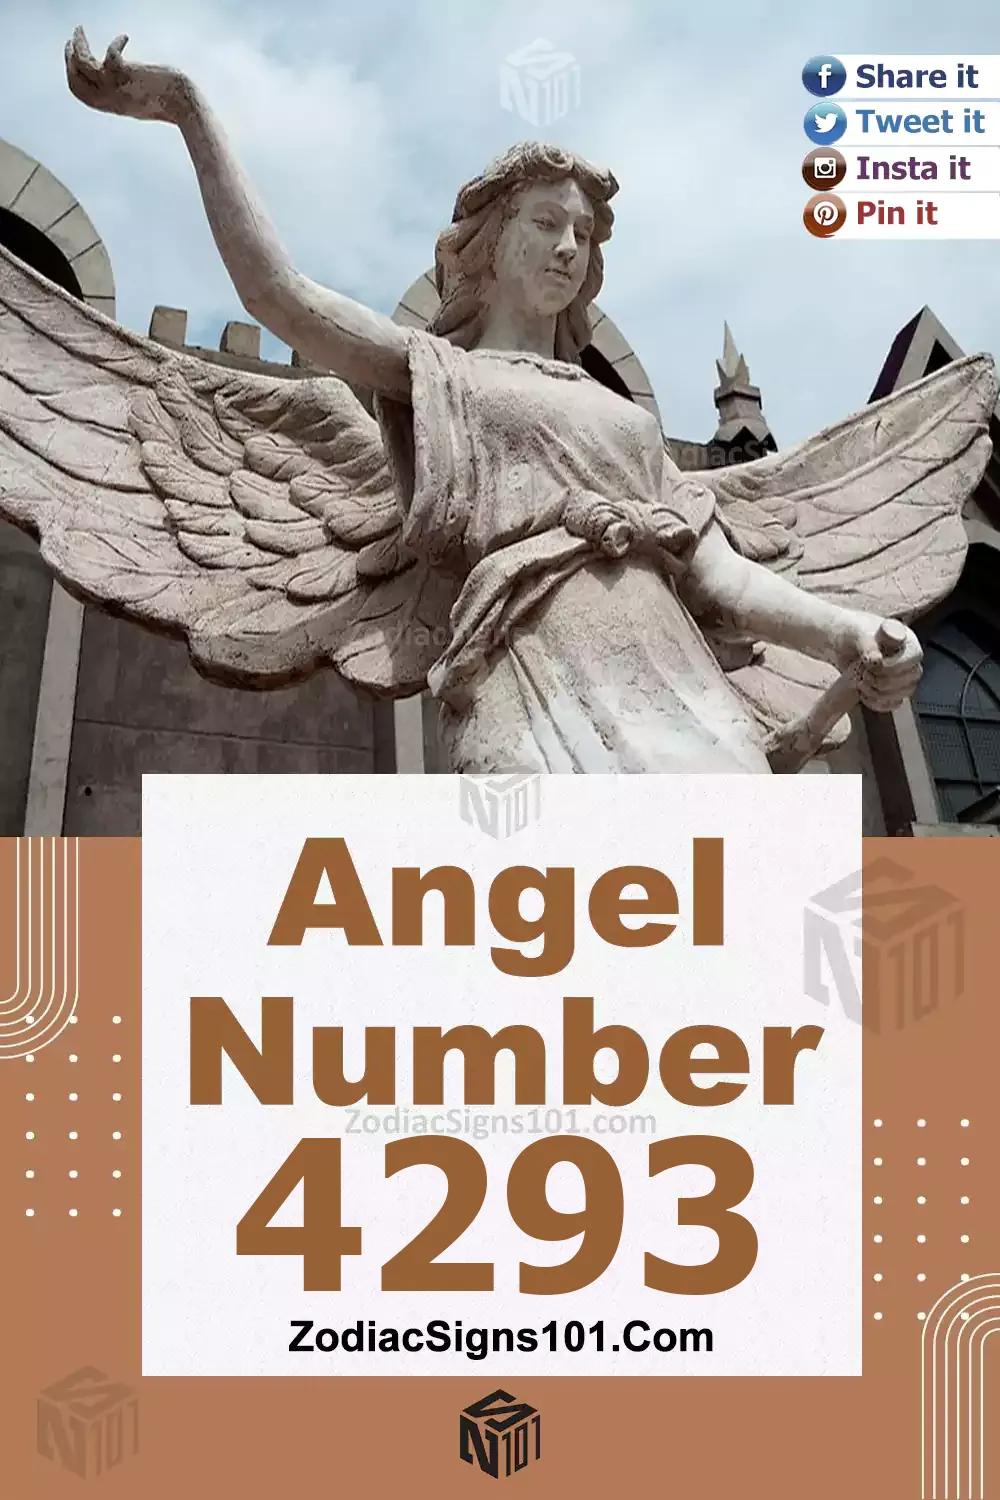 4293-Angel-Number-Meaning.jpg